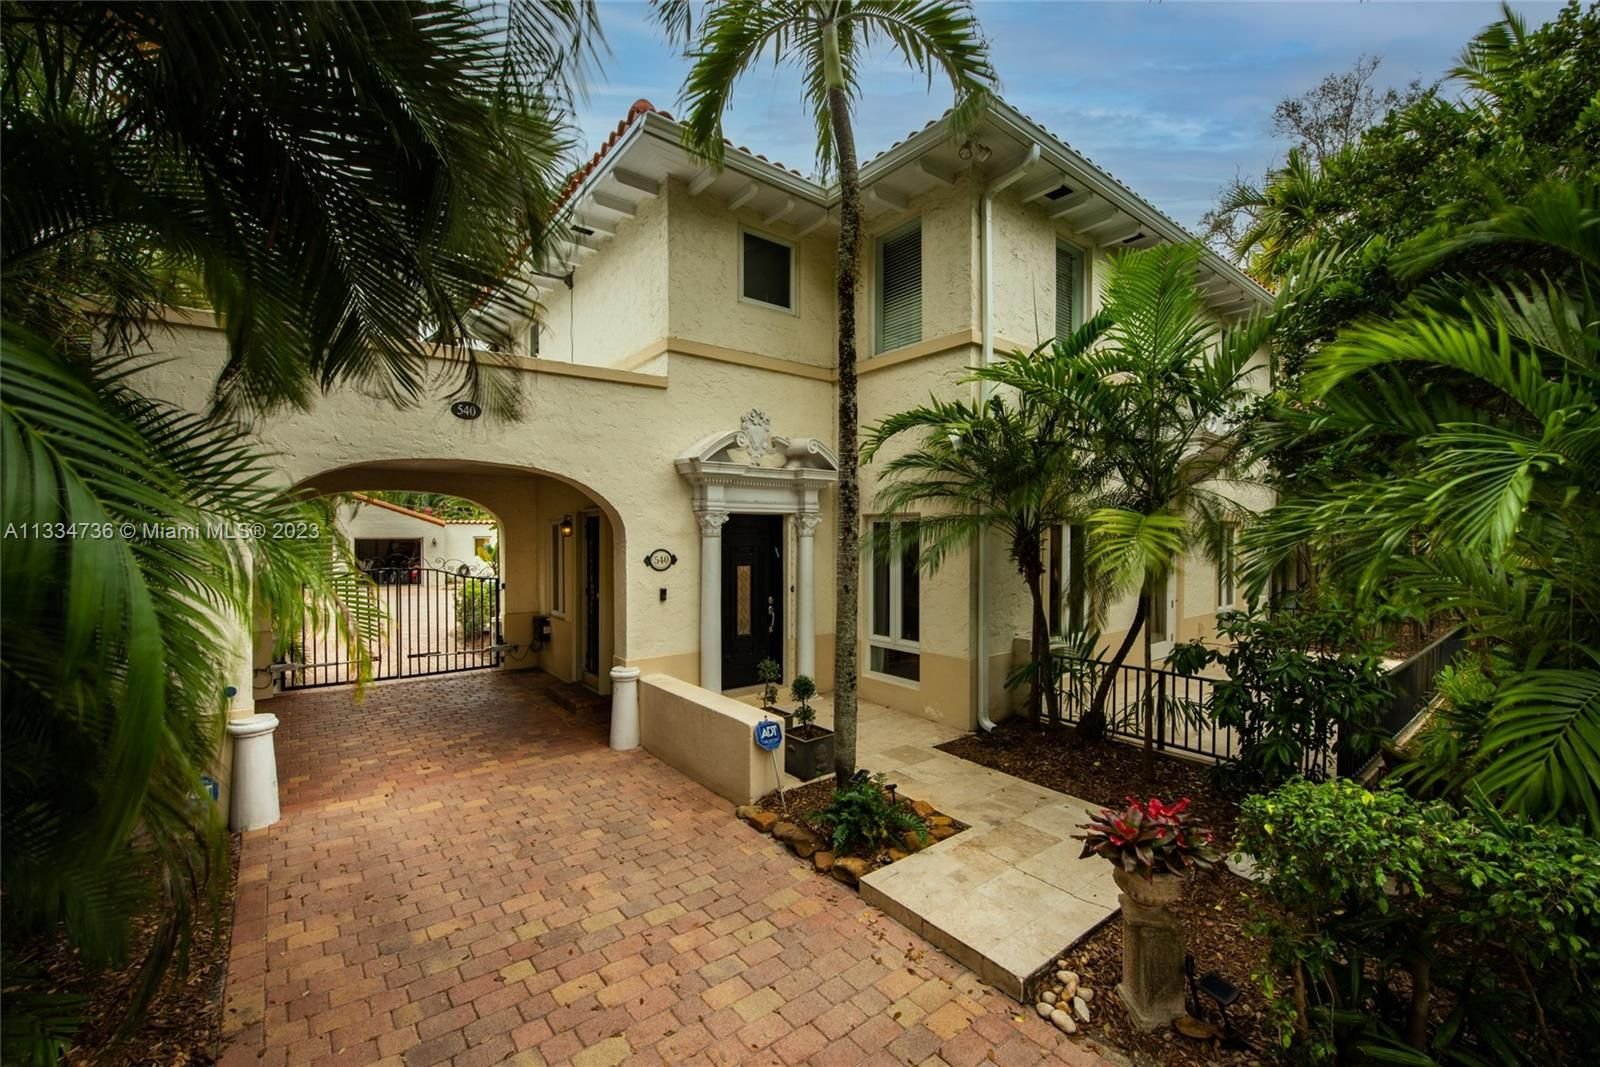 Real estate property located at 540 96th St, Miami-Dade County, Miami Shores, FL